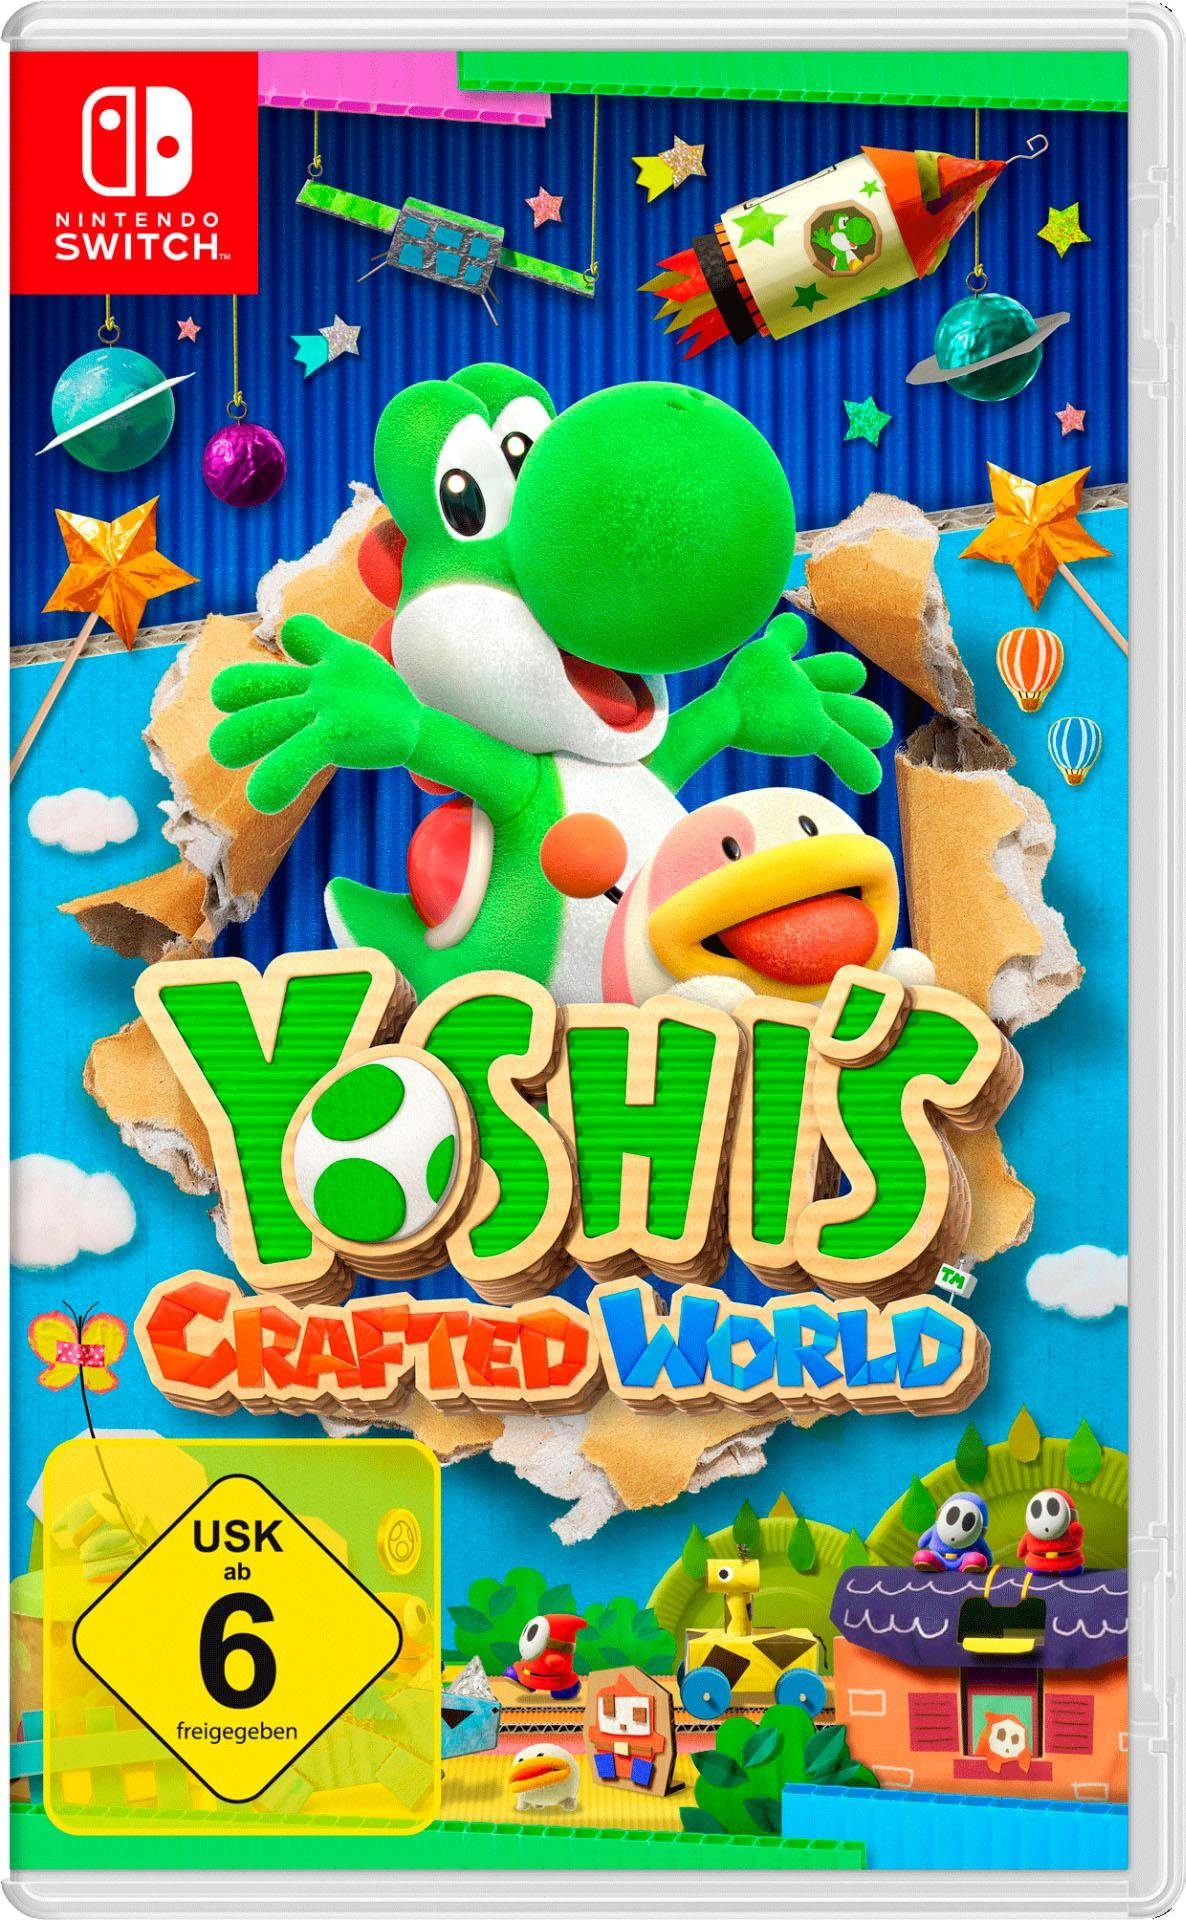 World Yoshi’s Nintendo Switch Crafted